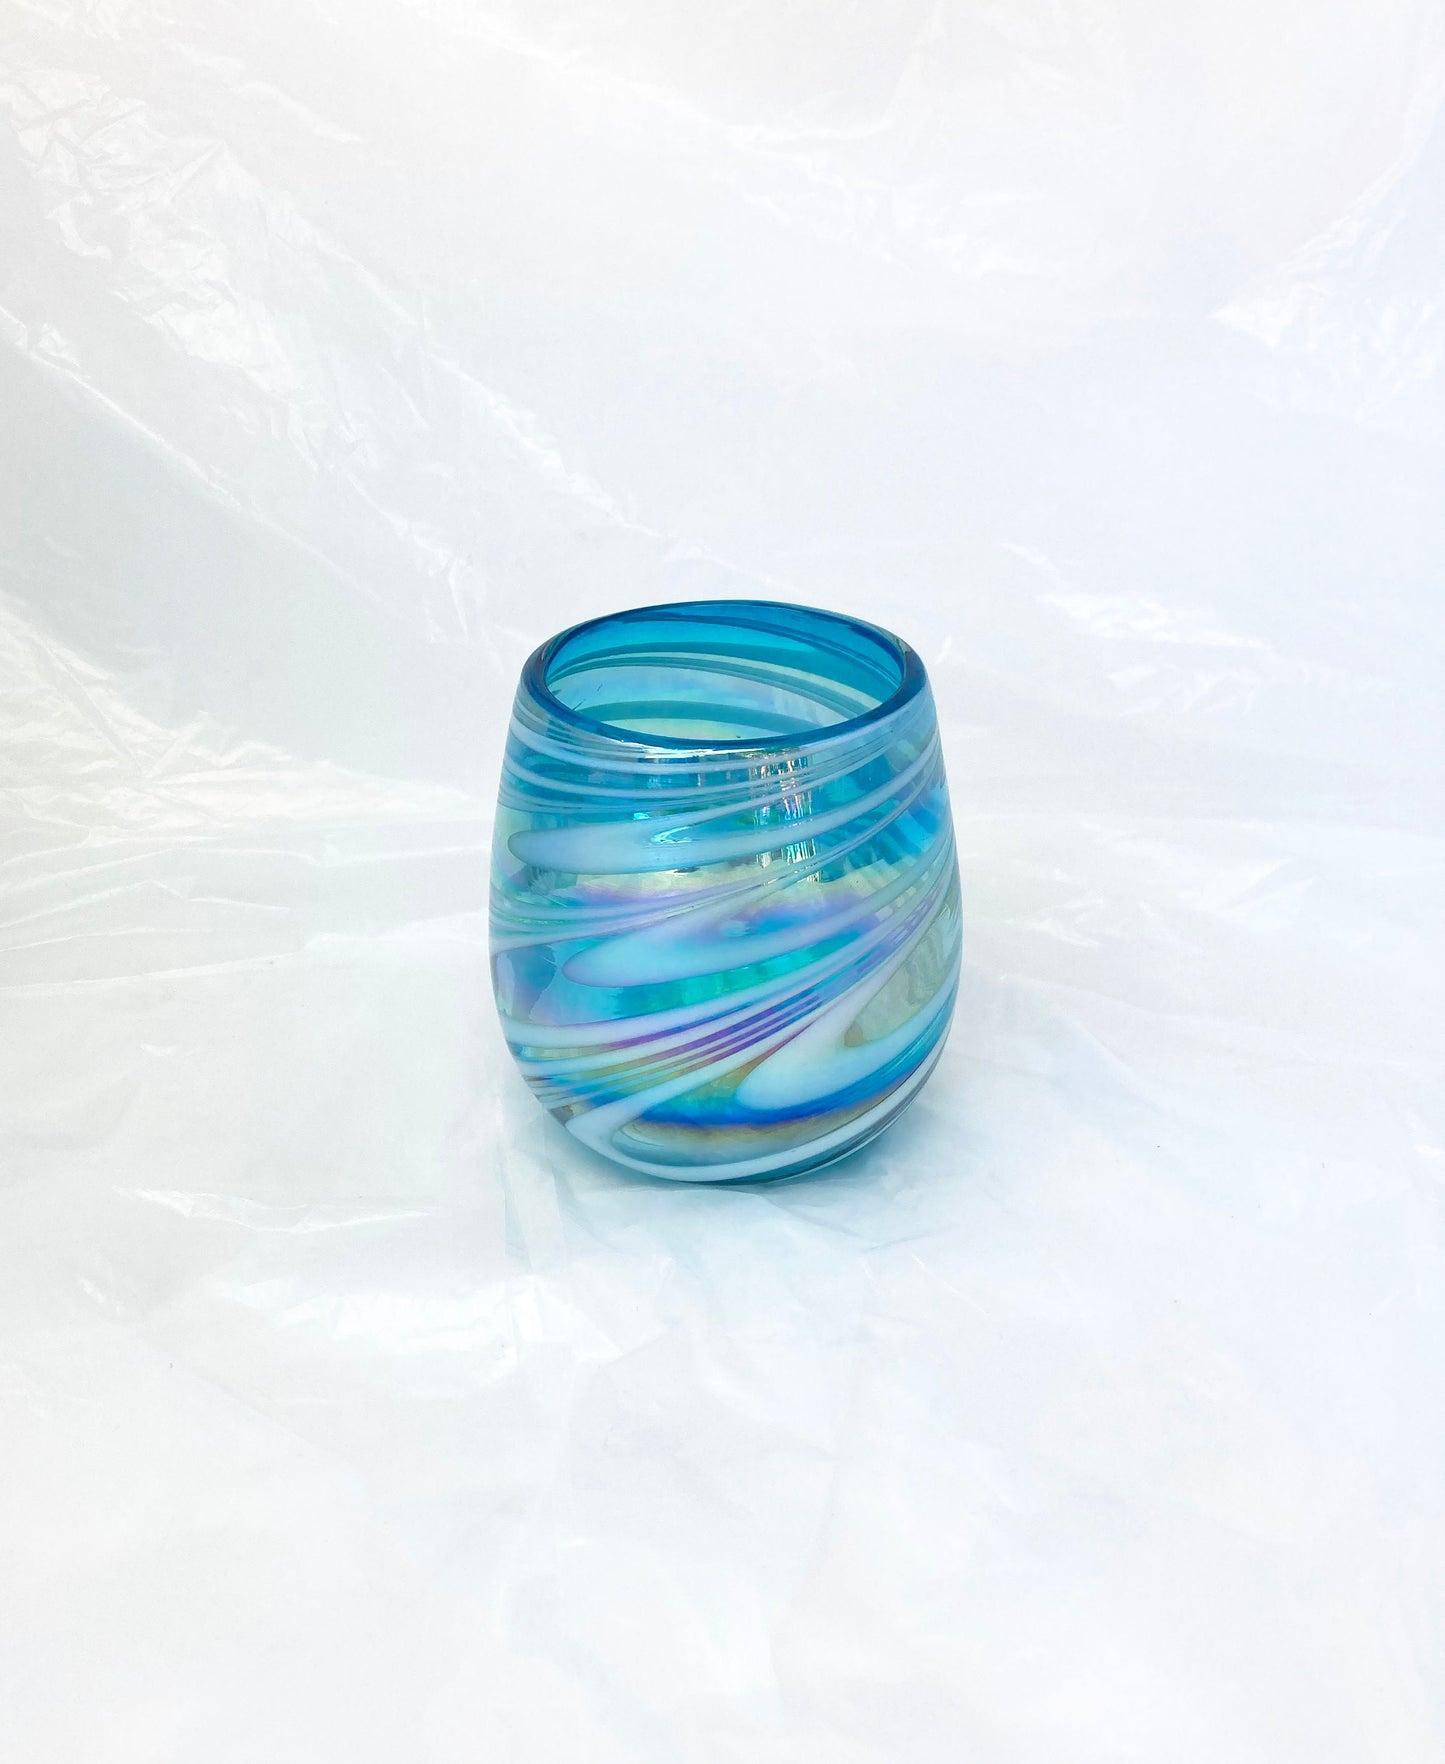 1 Stemless Wine Glass - Turquoise/White Swirl - Blue Dorado Designs